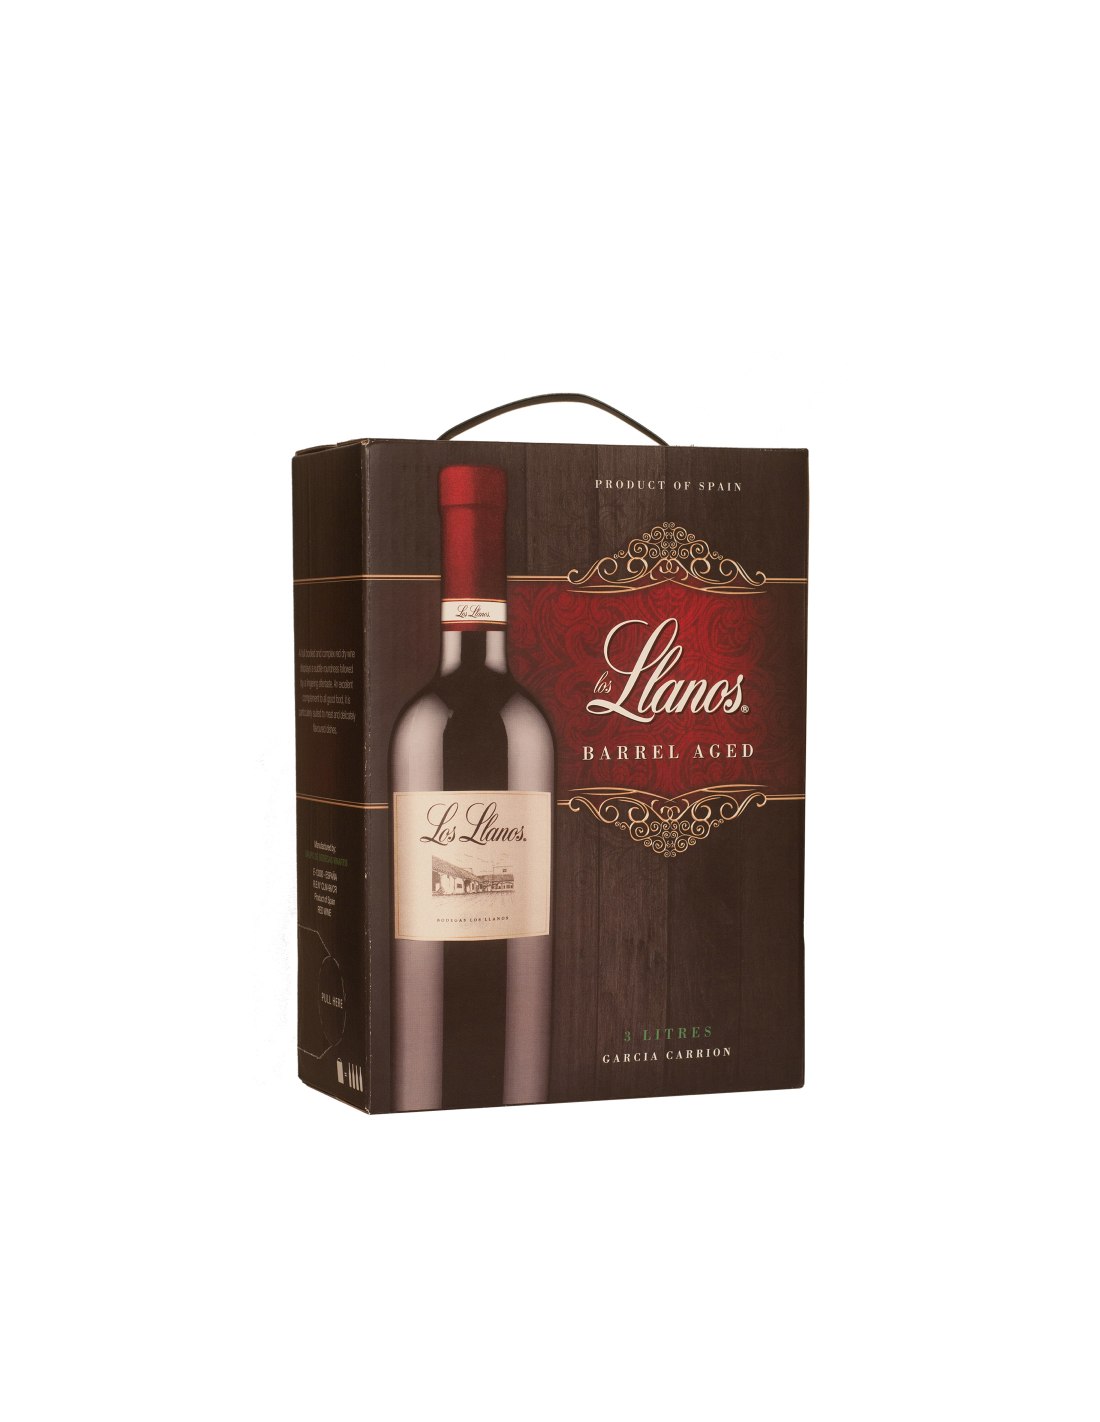 Vin rosu Llanos Barrel Aged, 13% alc., 3L, Spania